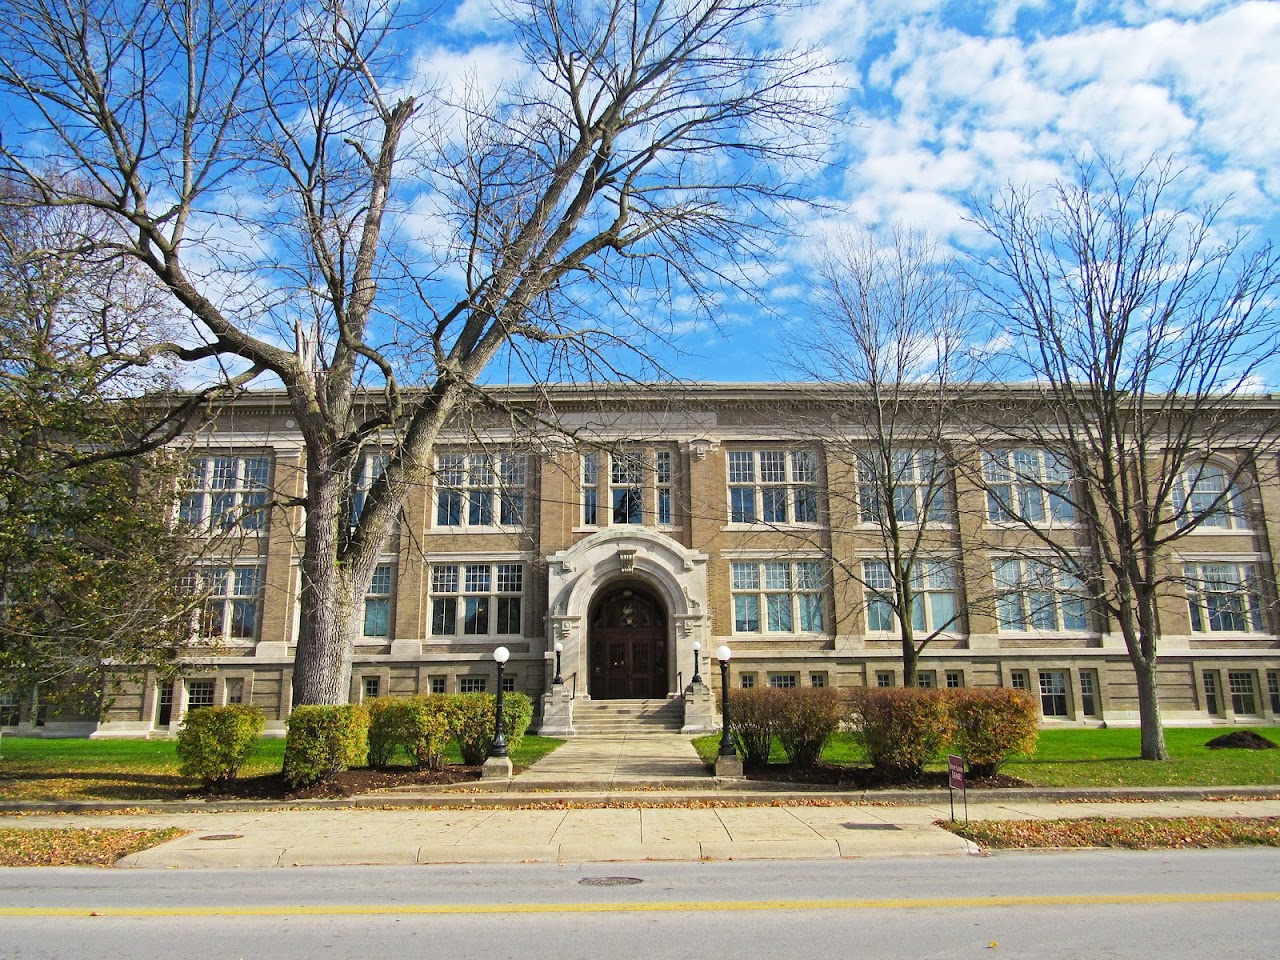 Photo of WASHINGTON SCHOOL at 318 N N ST WASHINGTON COURT HOUSE, OH 43160